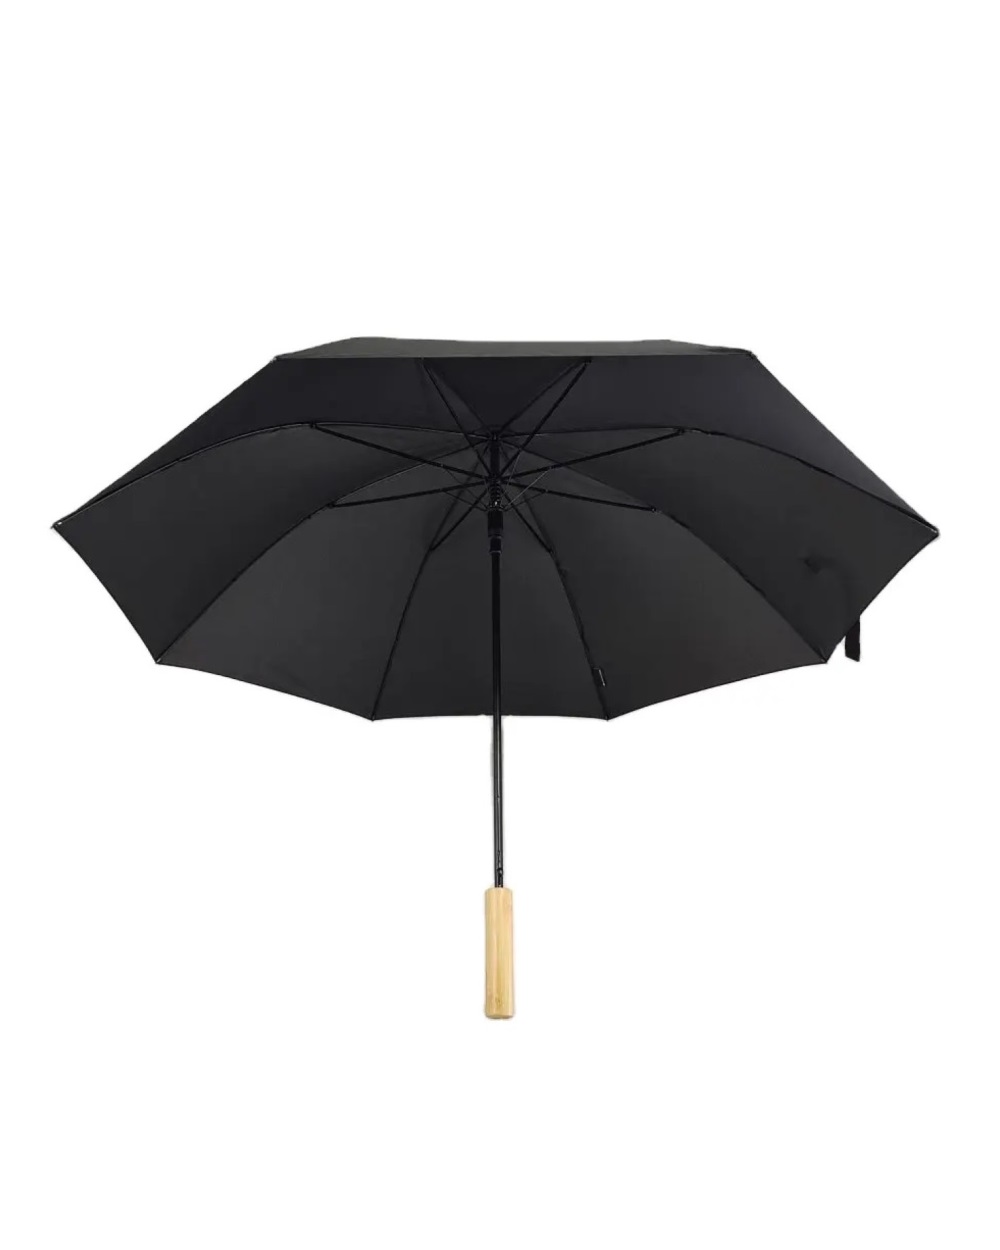 rpetstraightumbrella bamboohandle black open 1